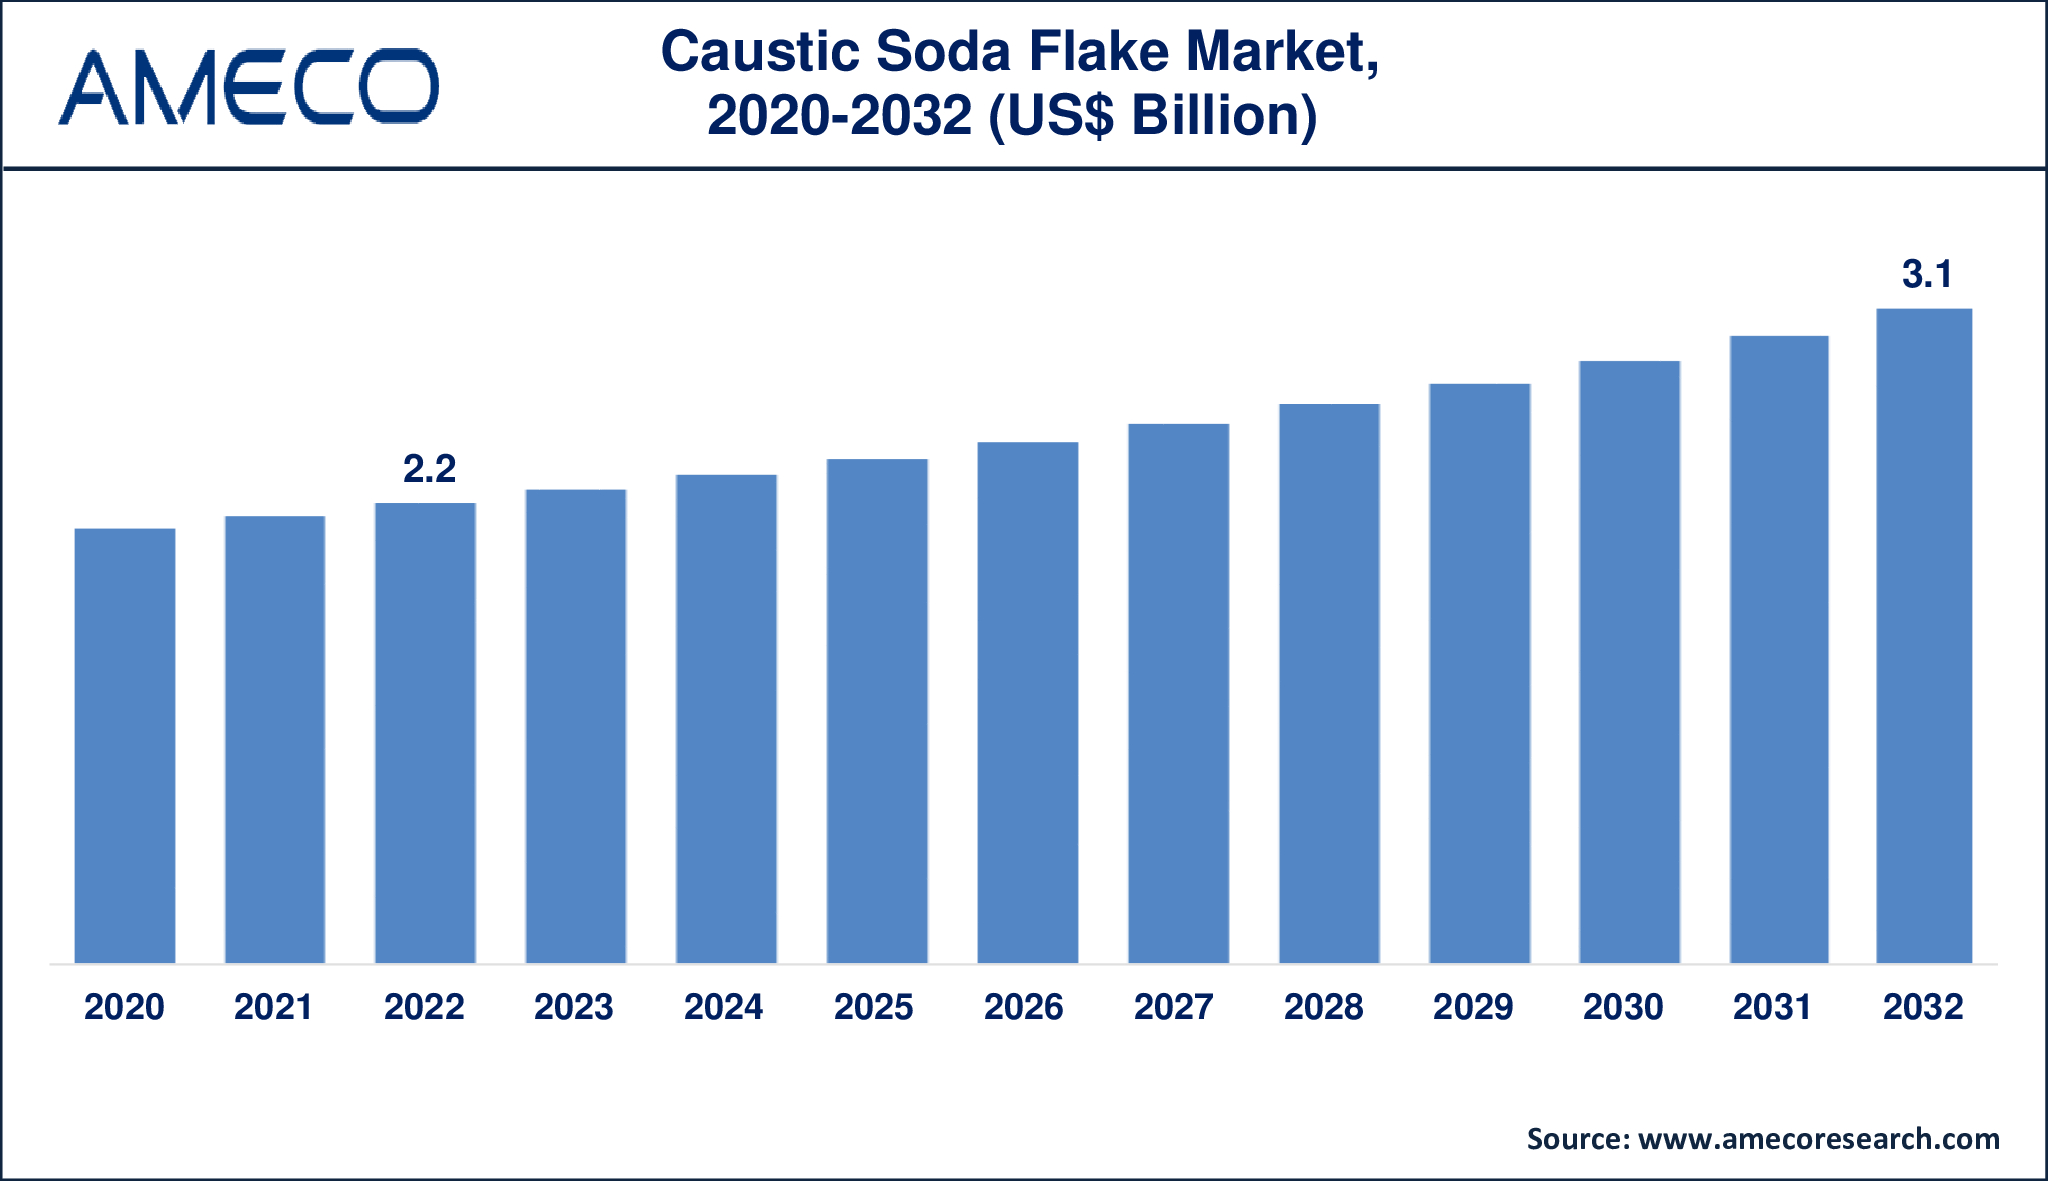 Caustic Soda Flake Market Size